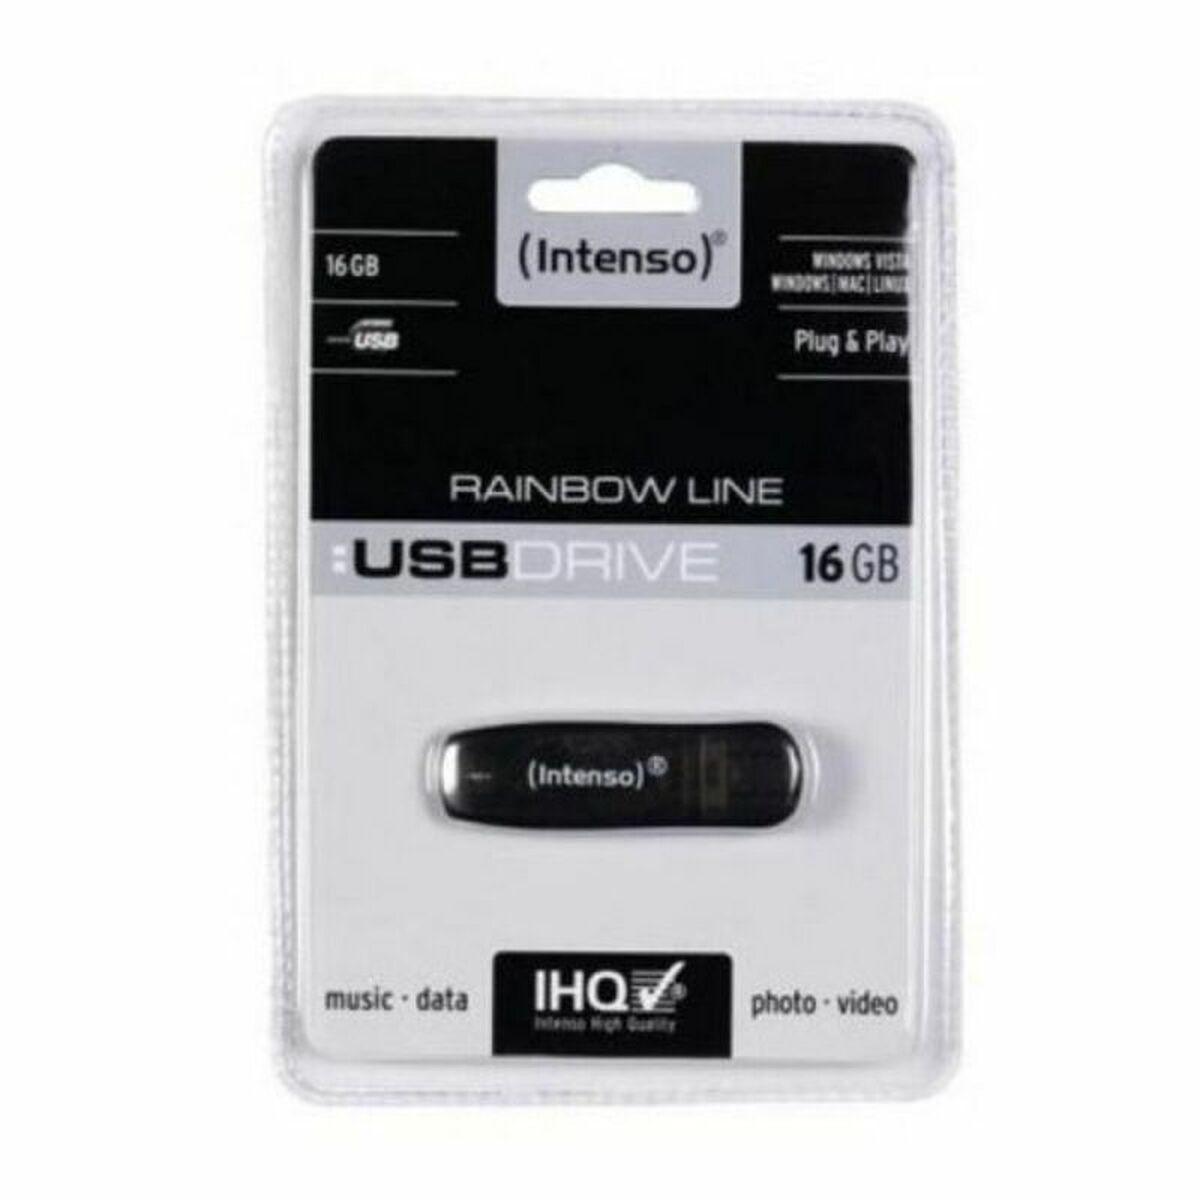 USB stick INTENSO Rainbow Line 16 GB Black 16 GB USB stick - Sterilamo